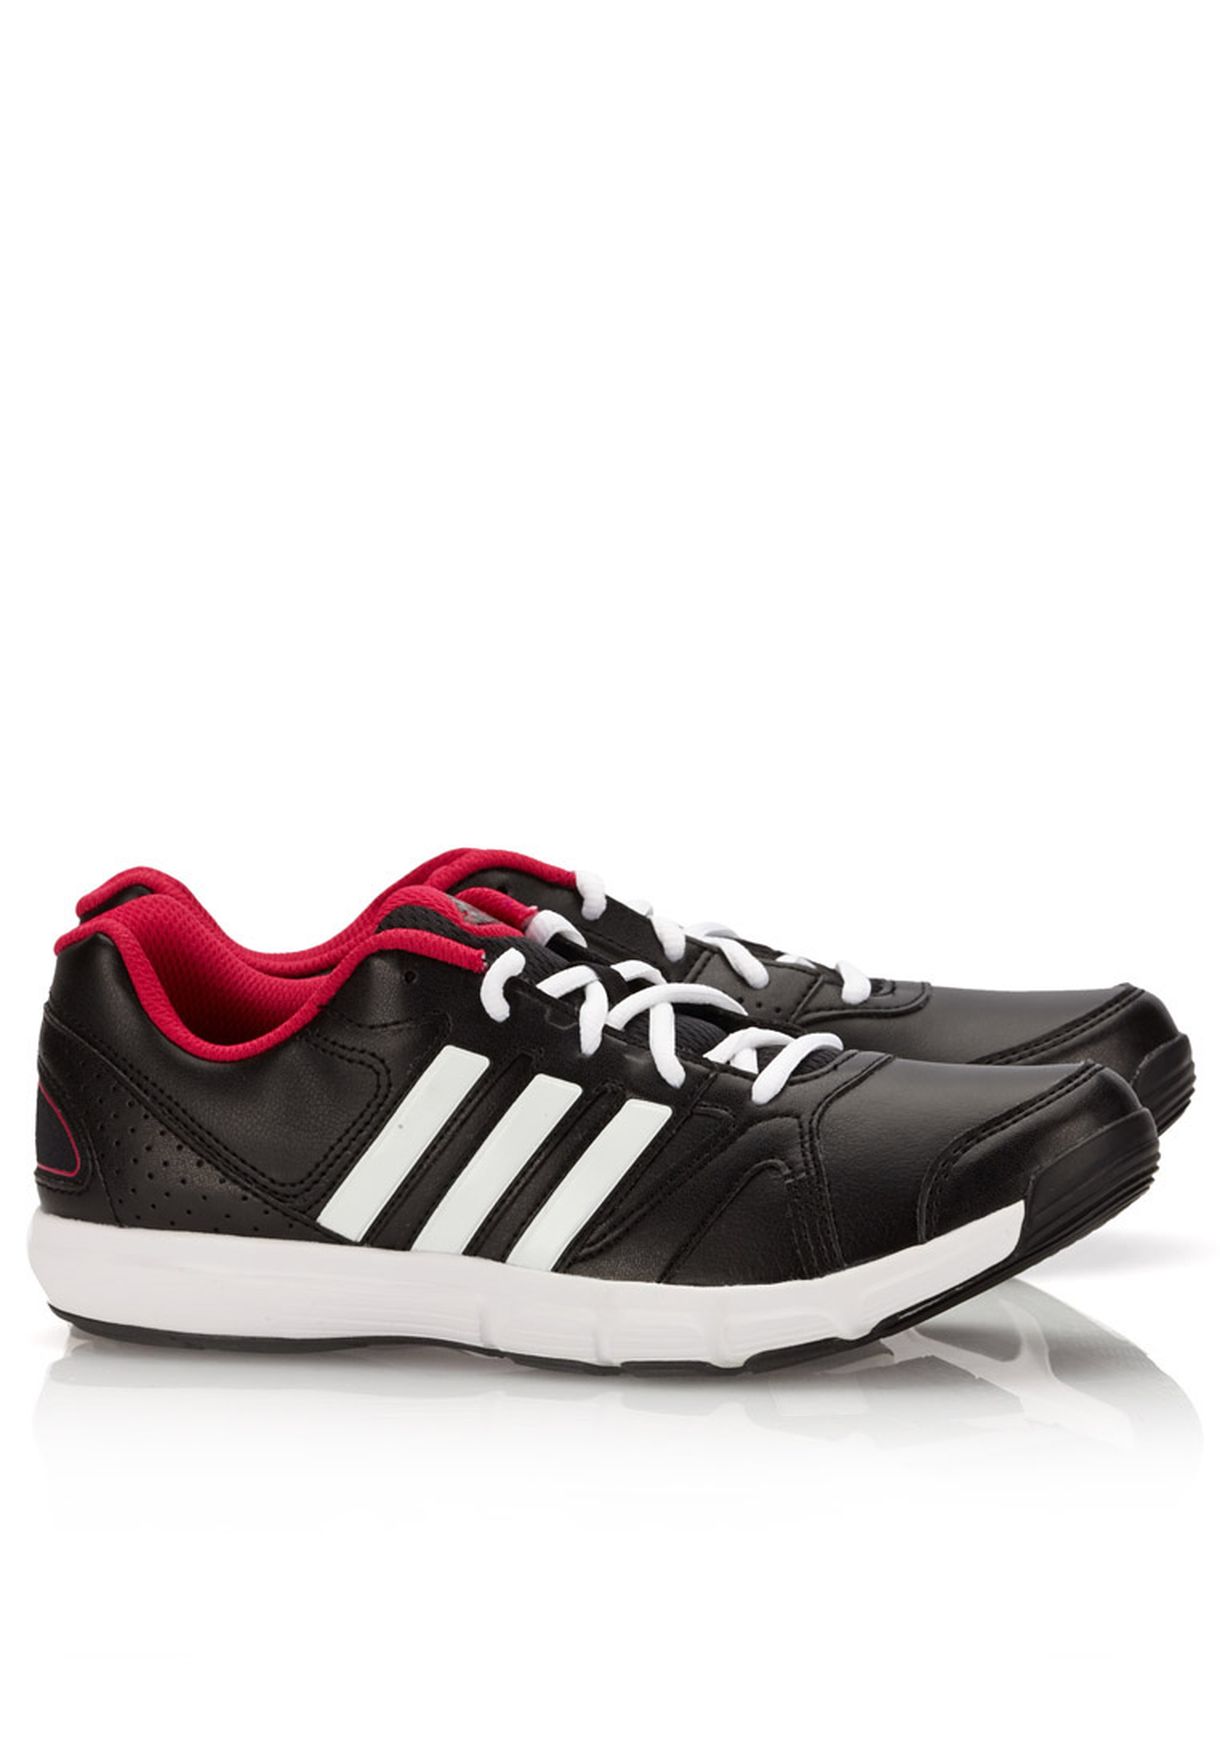 adidas essential star ii running shoes